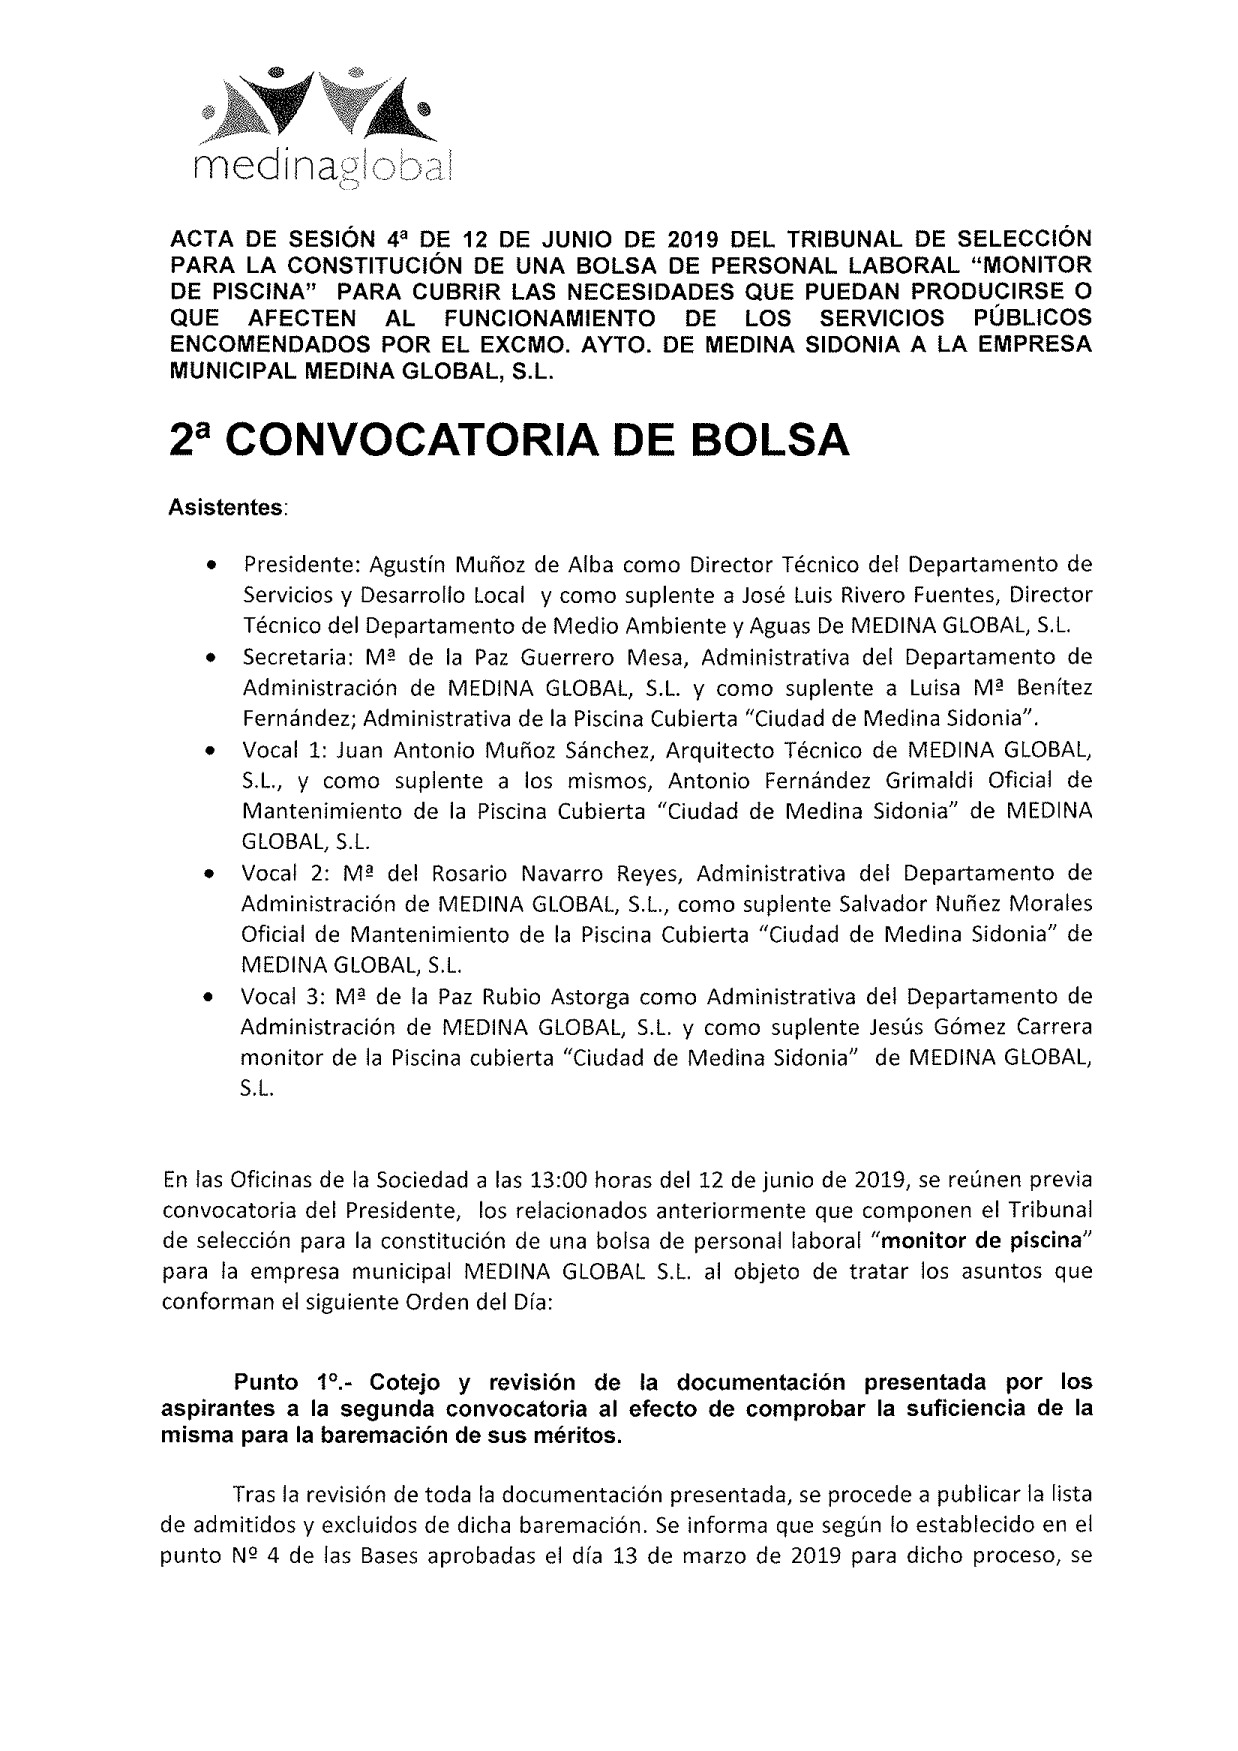 ACTA 4ª MESA DE VALORACION LISTA ADMITIDOS Y EXCLUIDOS 2 ª CONVOCATORIA BOLSA 2019 MONITOR PISCINA